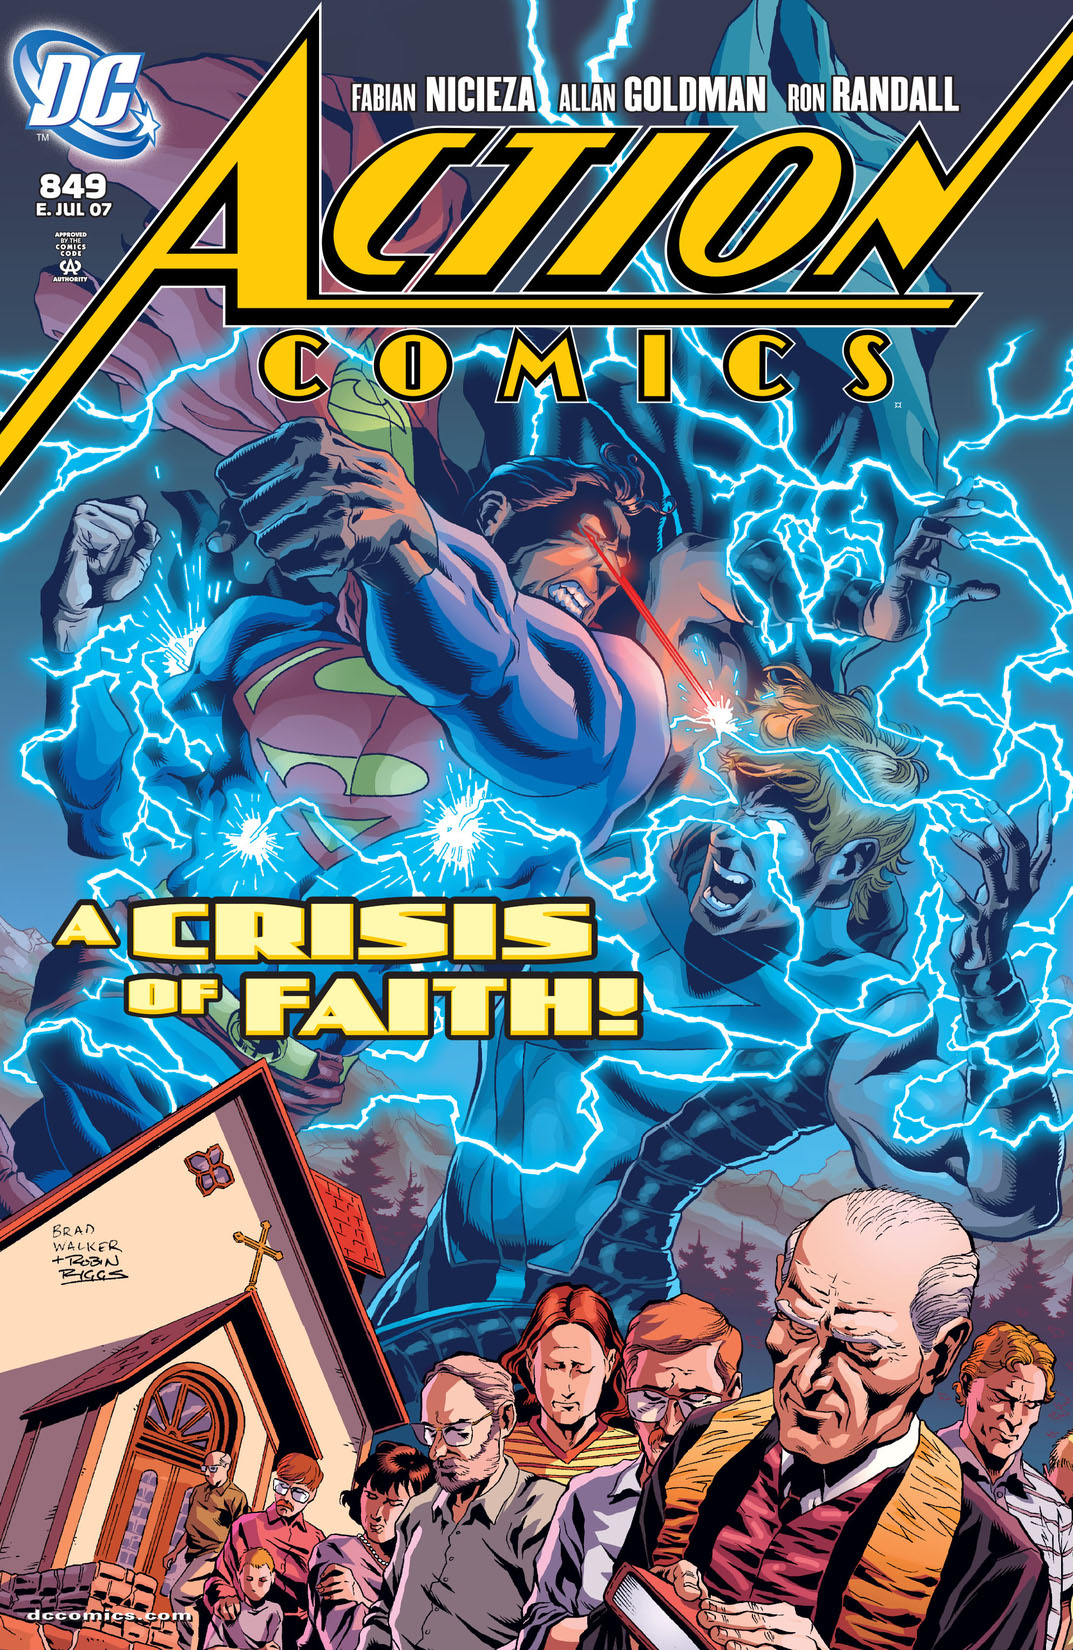 Action Comics (2010-) #849 preview images